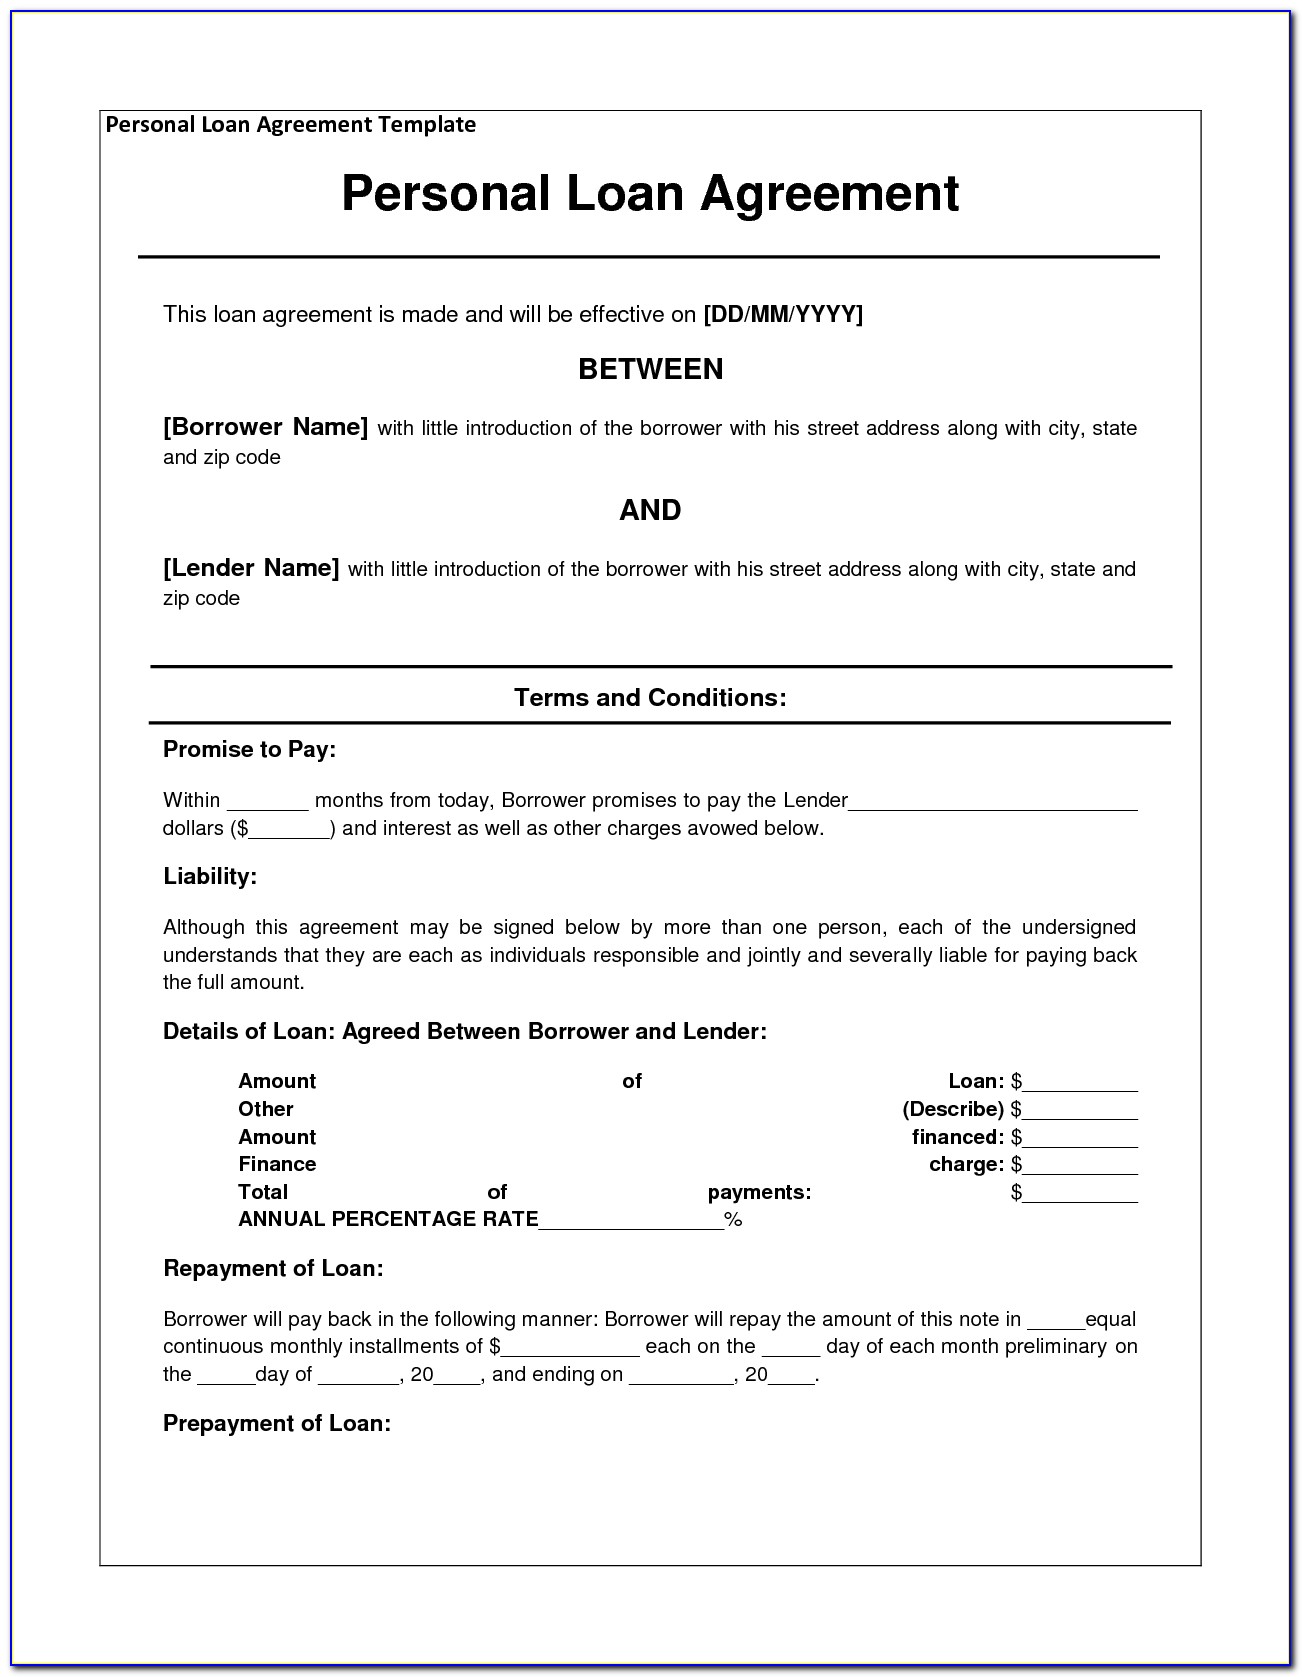 Free Loan Agreement Form